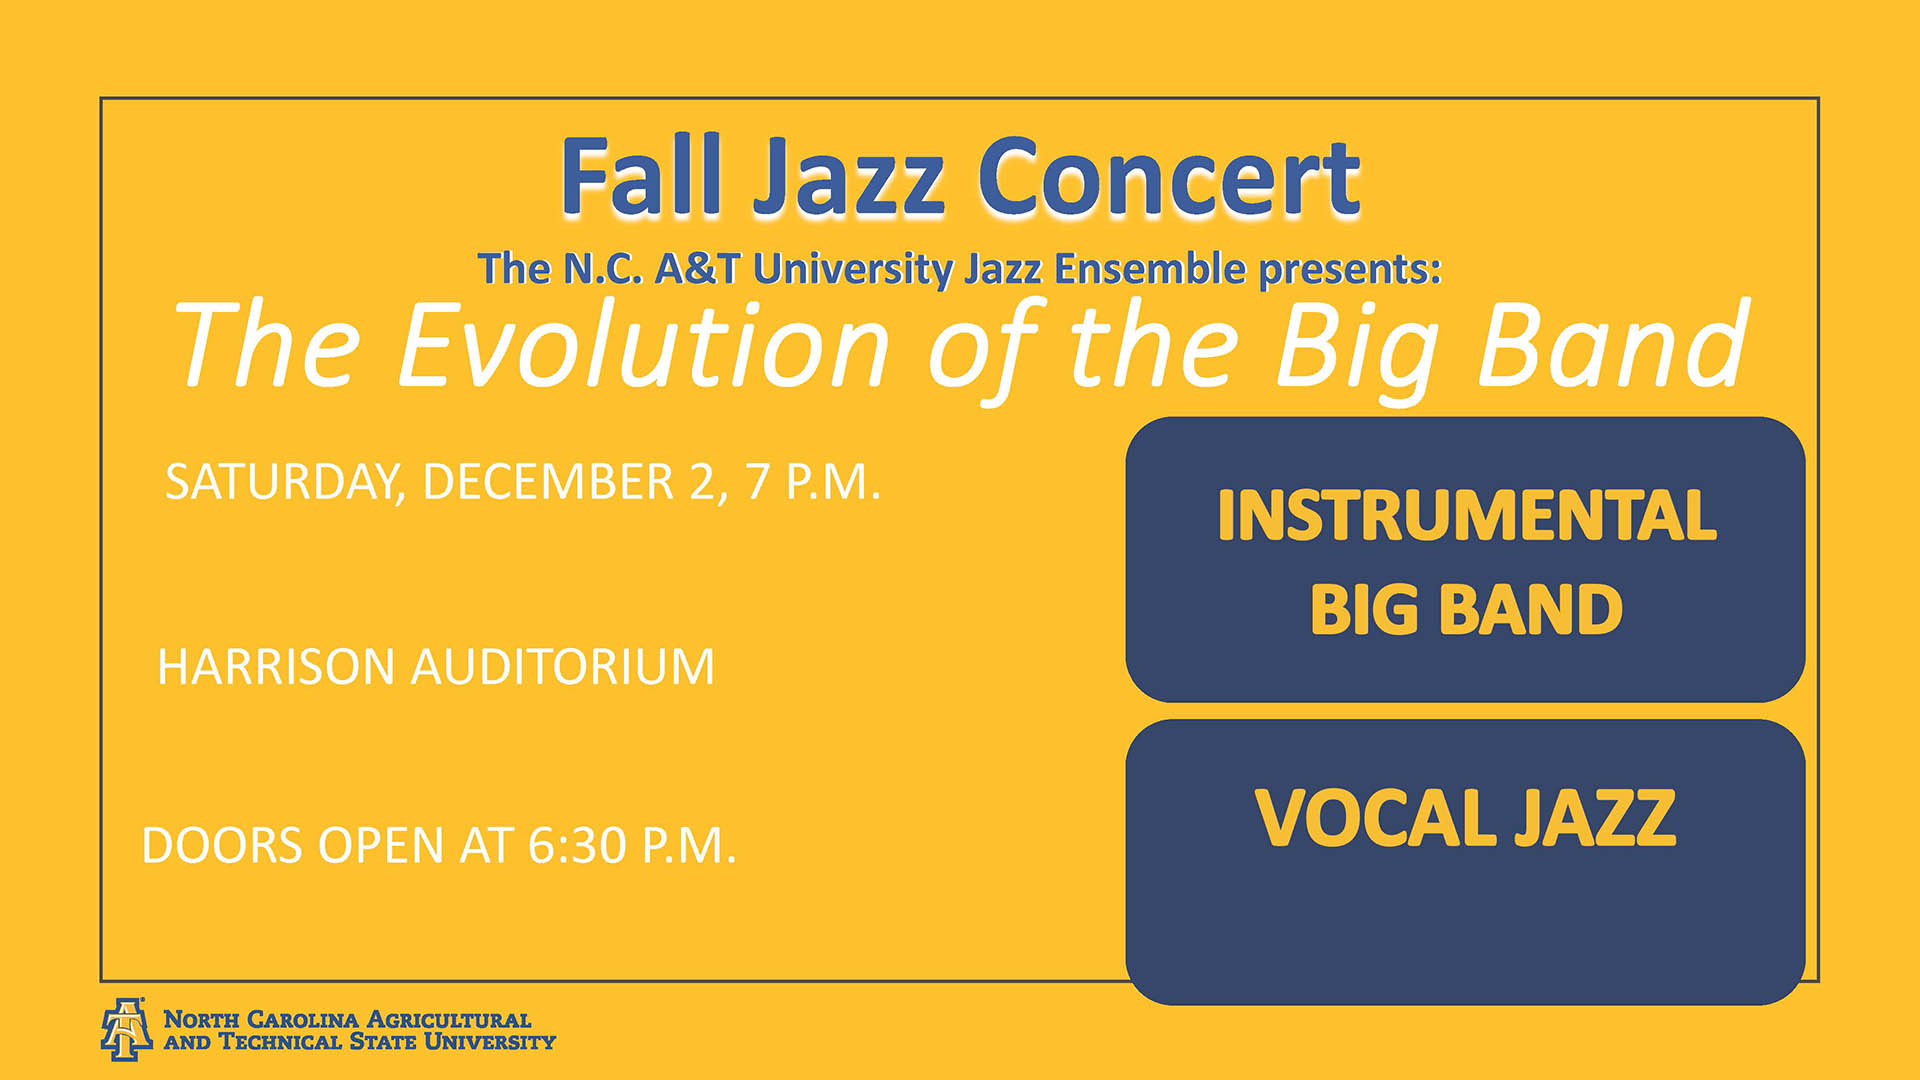 The Evolution of the Big Band University Jazz Ensemble flyer